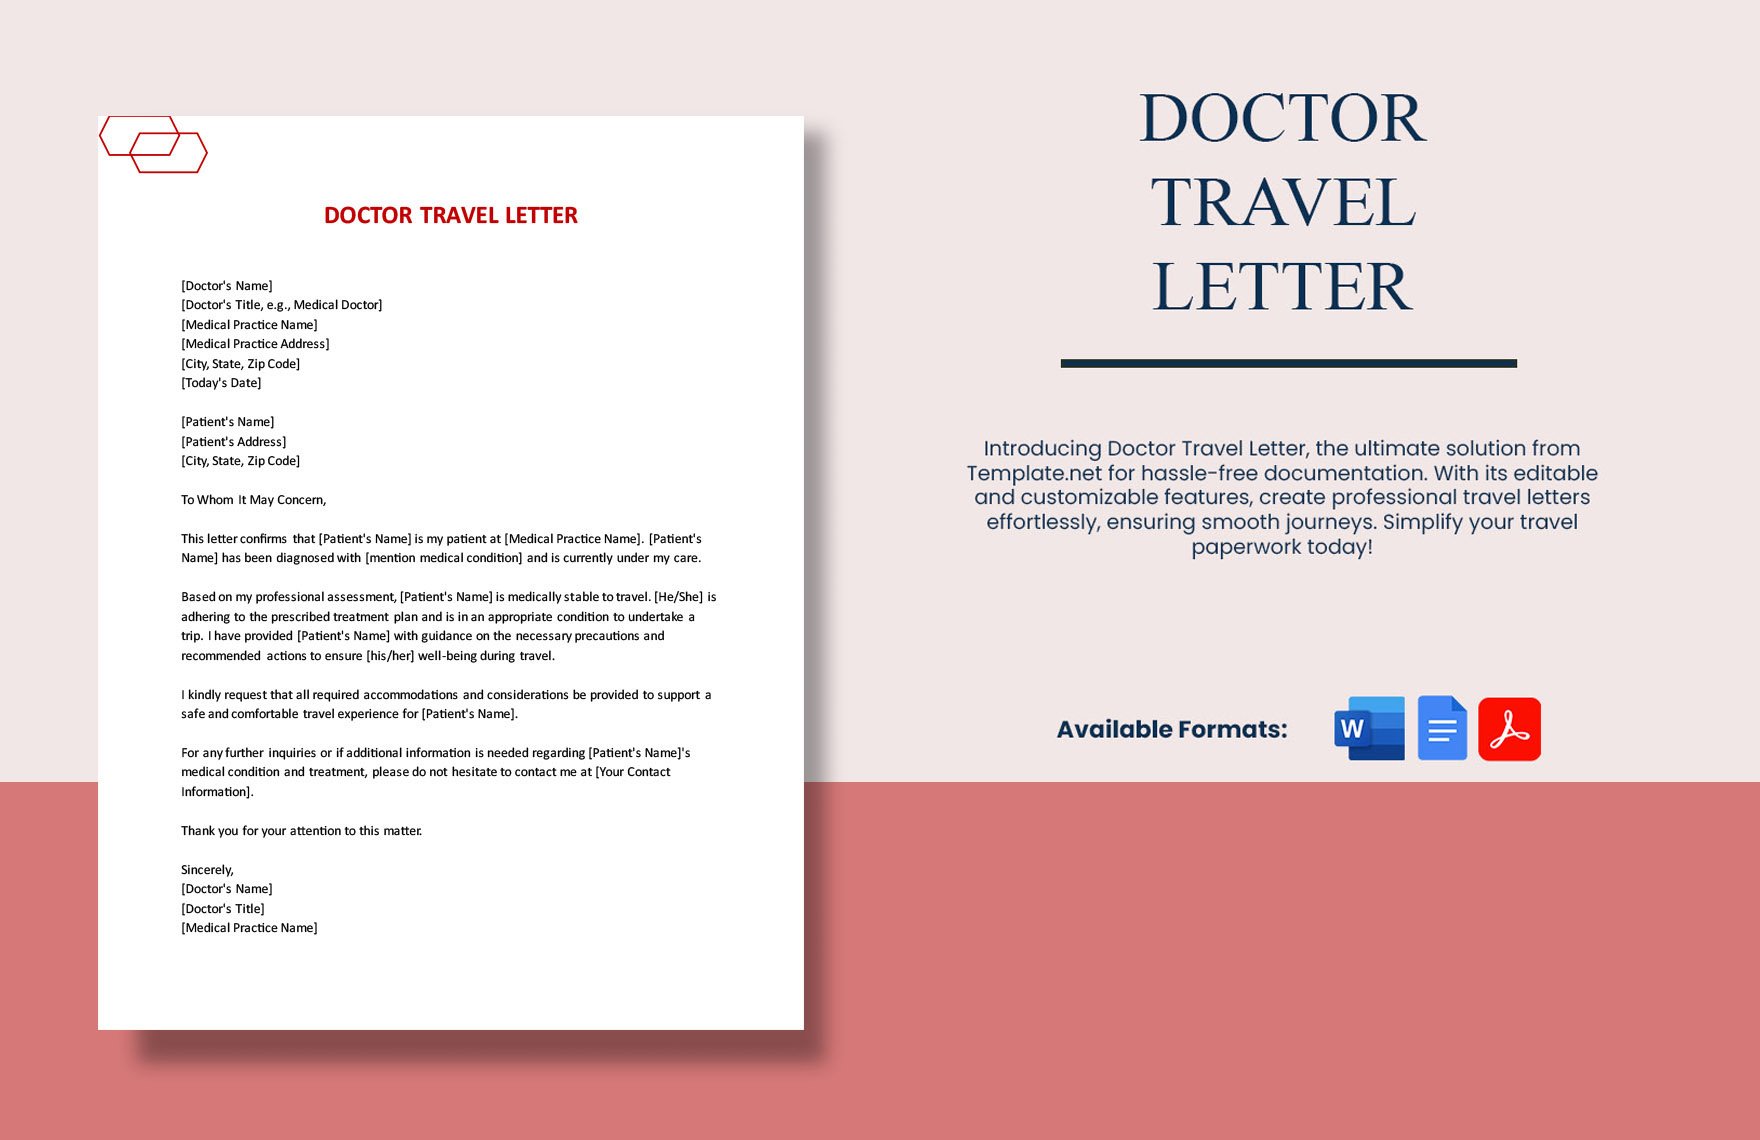 Doctor Travel Letter in Word, Google Docs, PDF